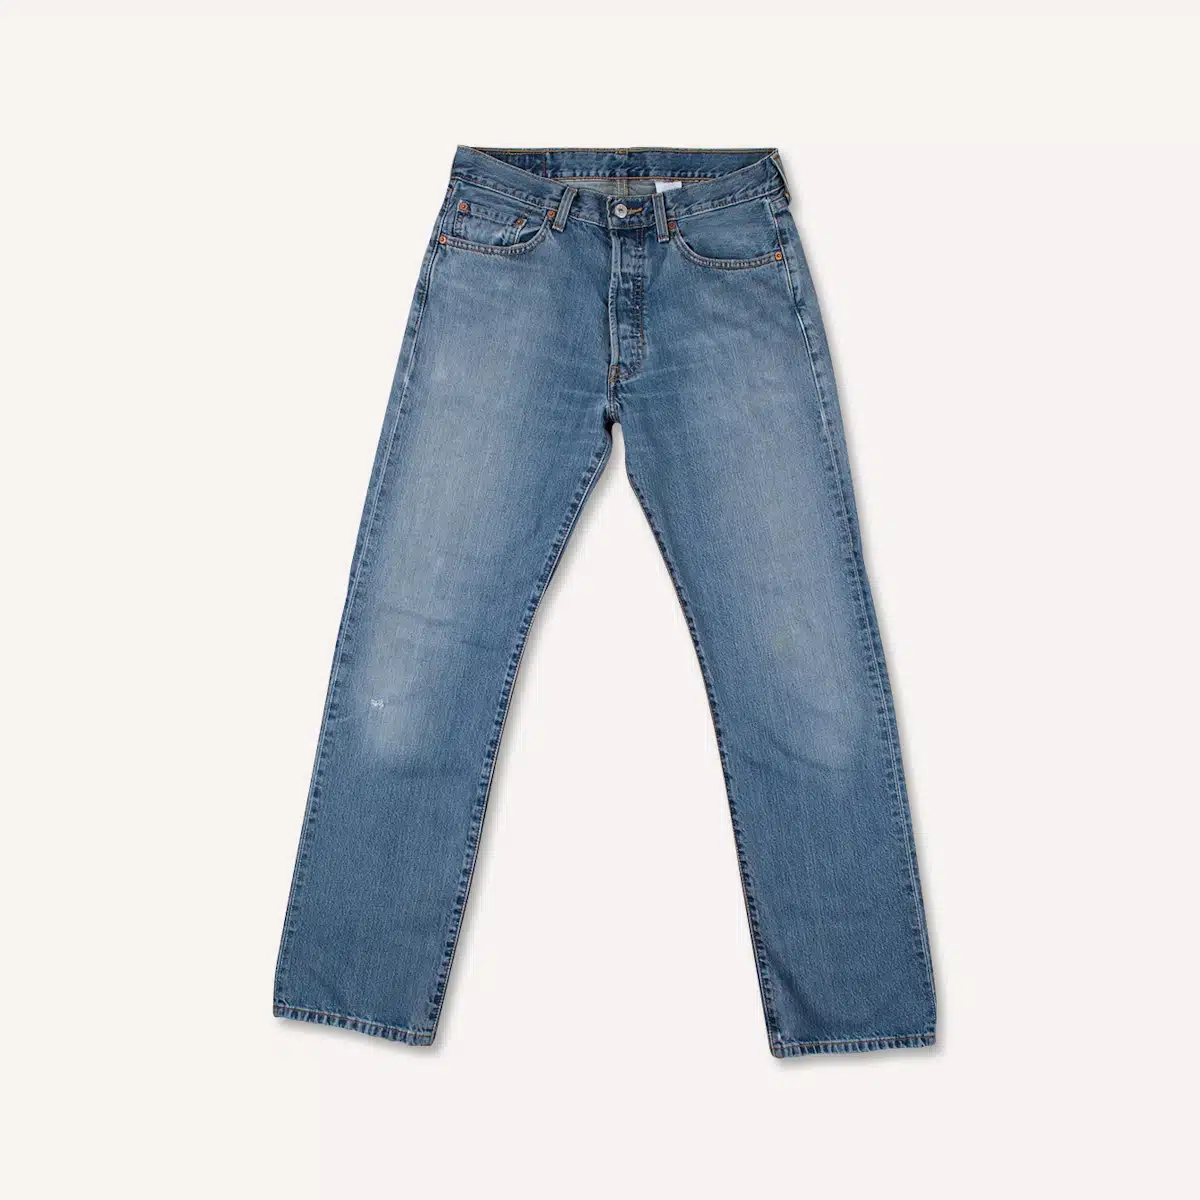 Holdwest Vintage Levis 501 Jeans